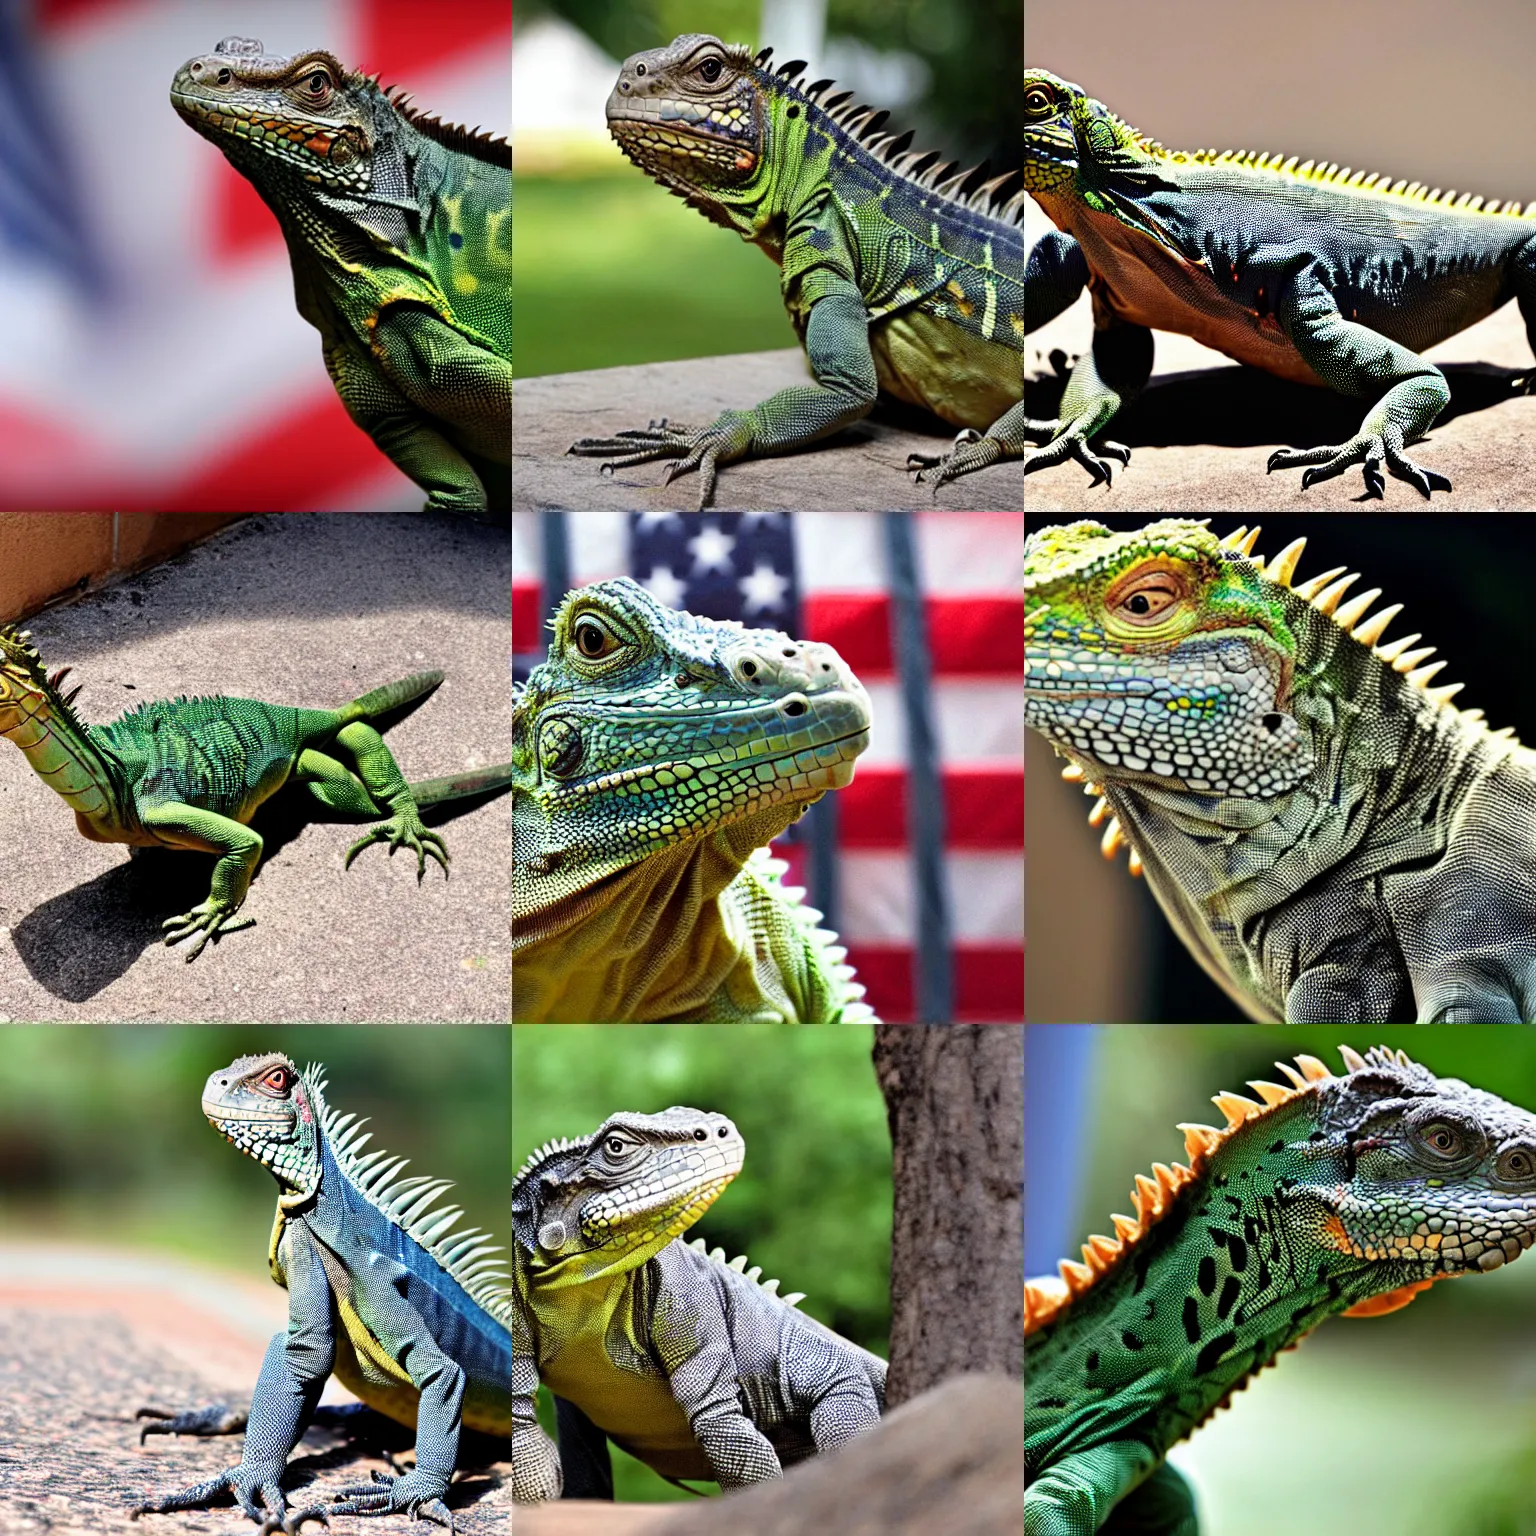 Prompt: an iguana named obama